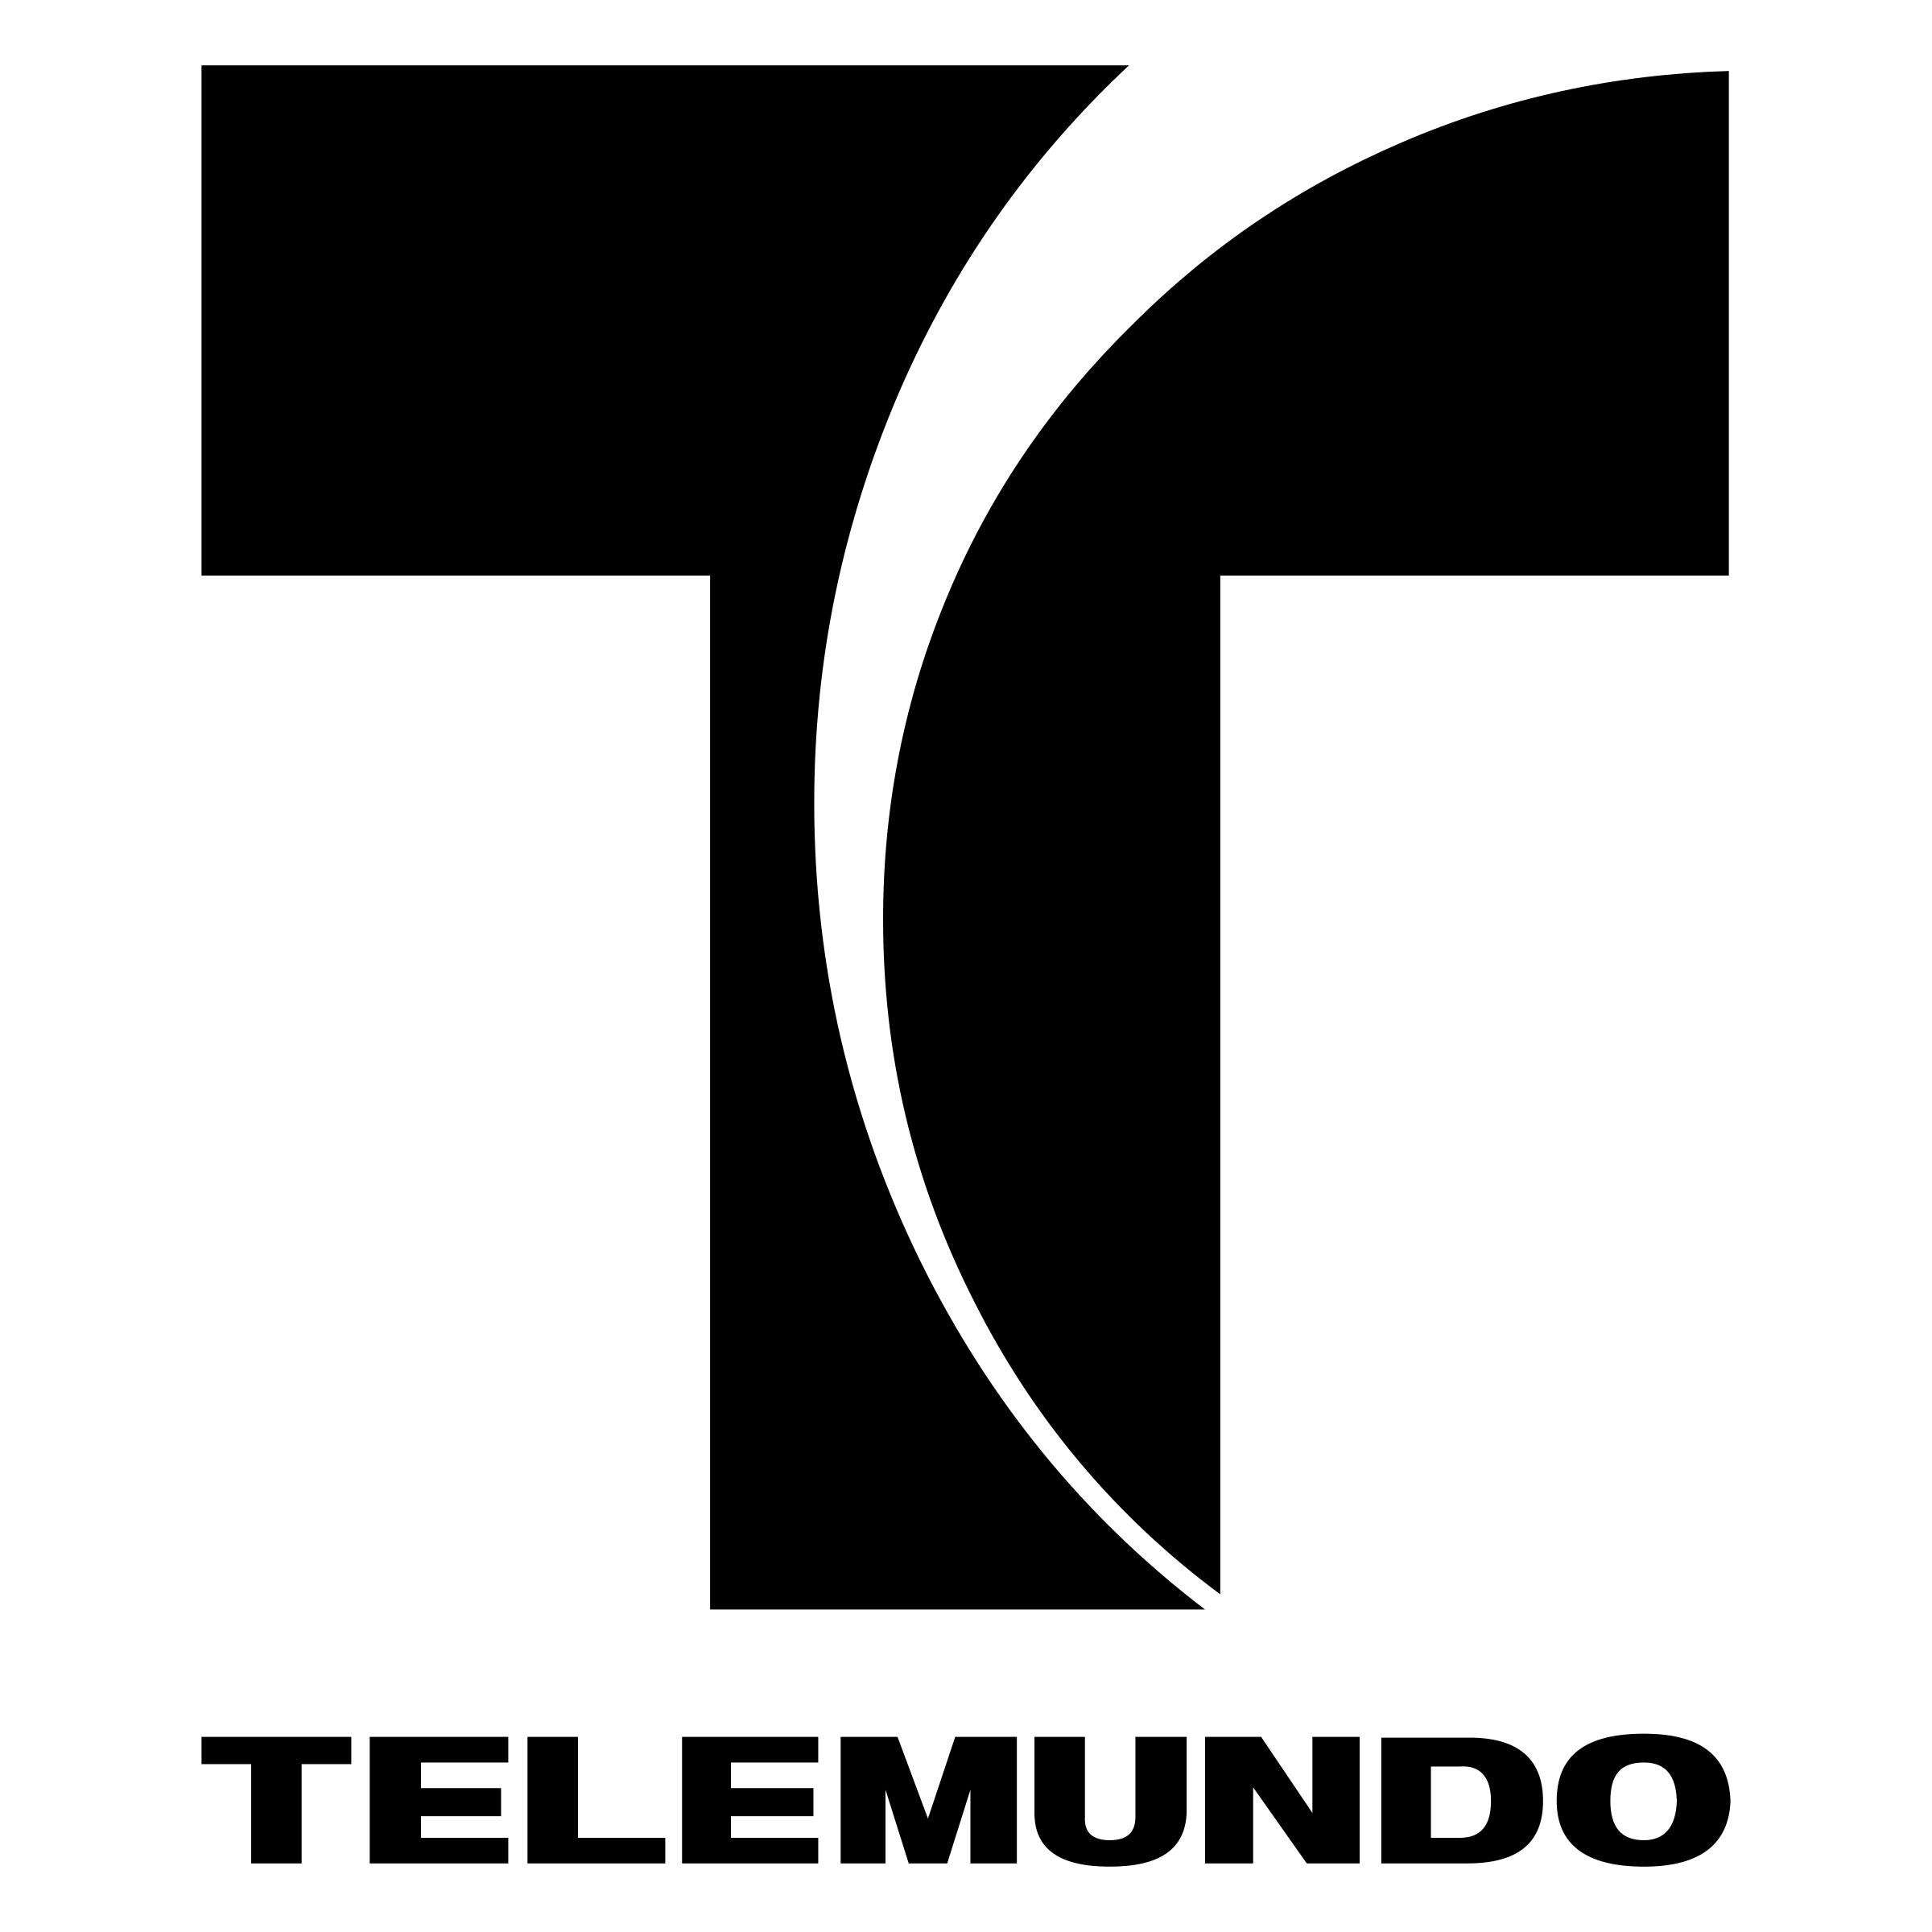 Telemundo Logo - Telemundo Logo PNG Transparent & SVG Vector - Freebie Supply